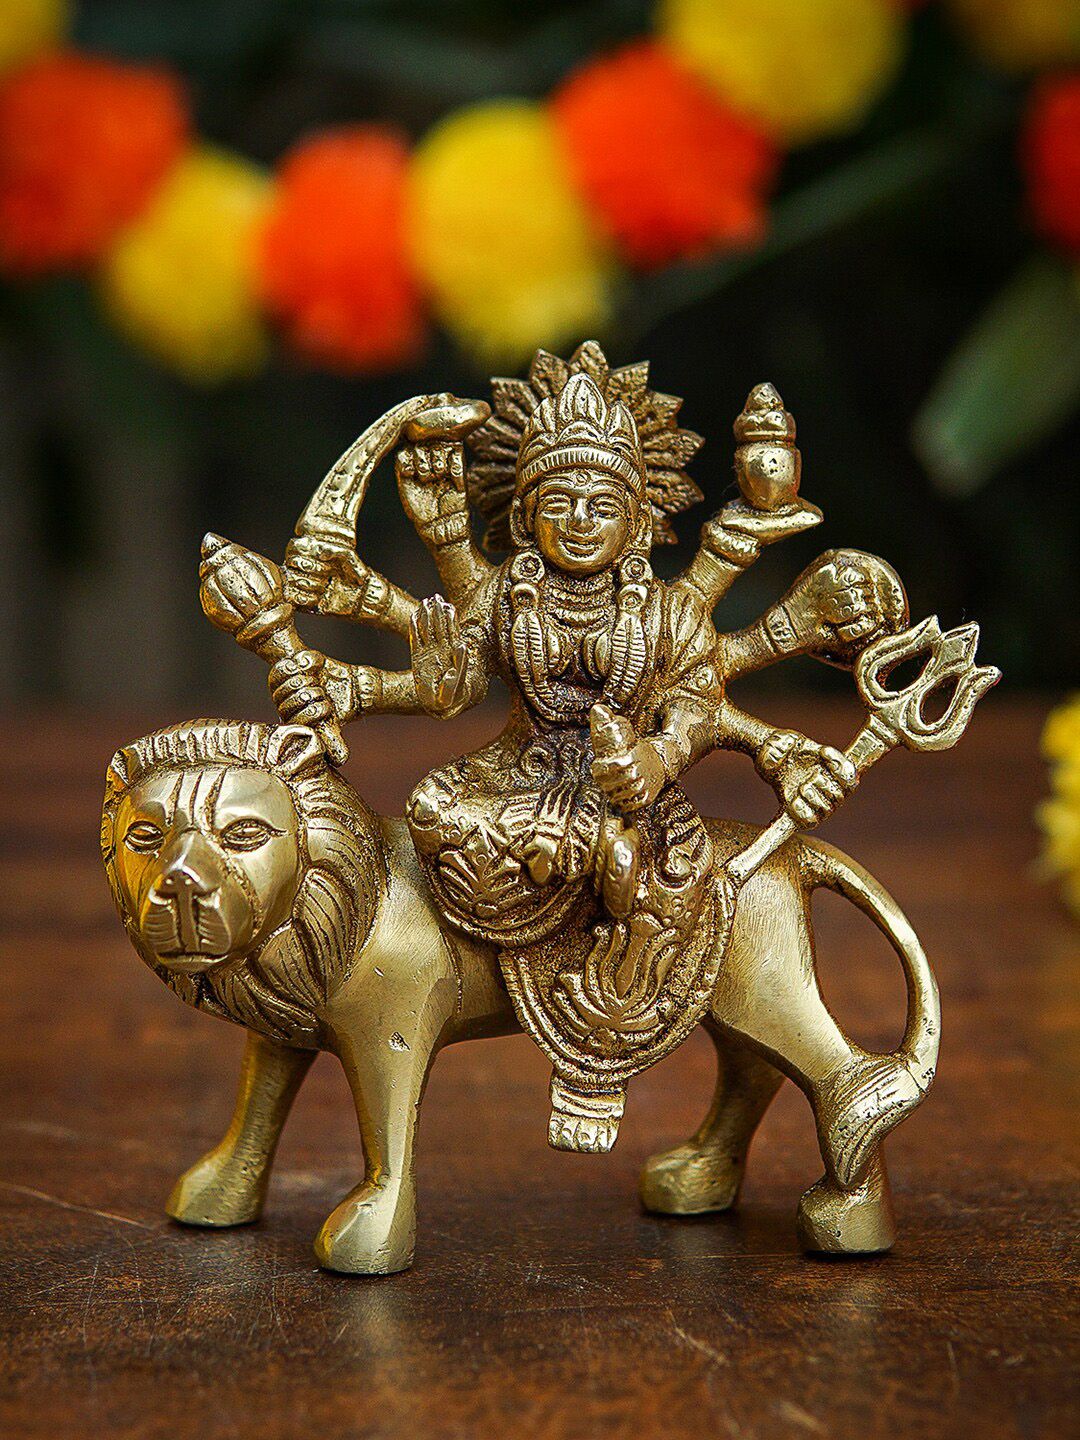 StatueStudio Gold-Toned Durga Murti Showpiece Price in India